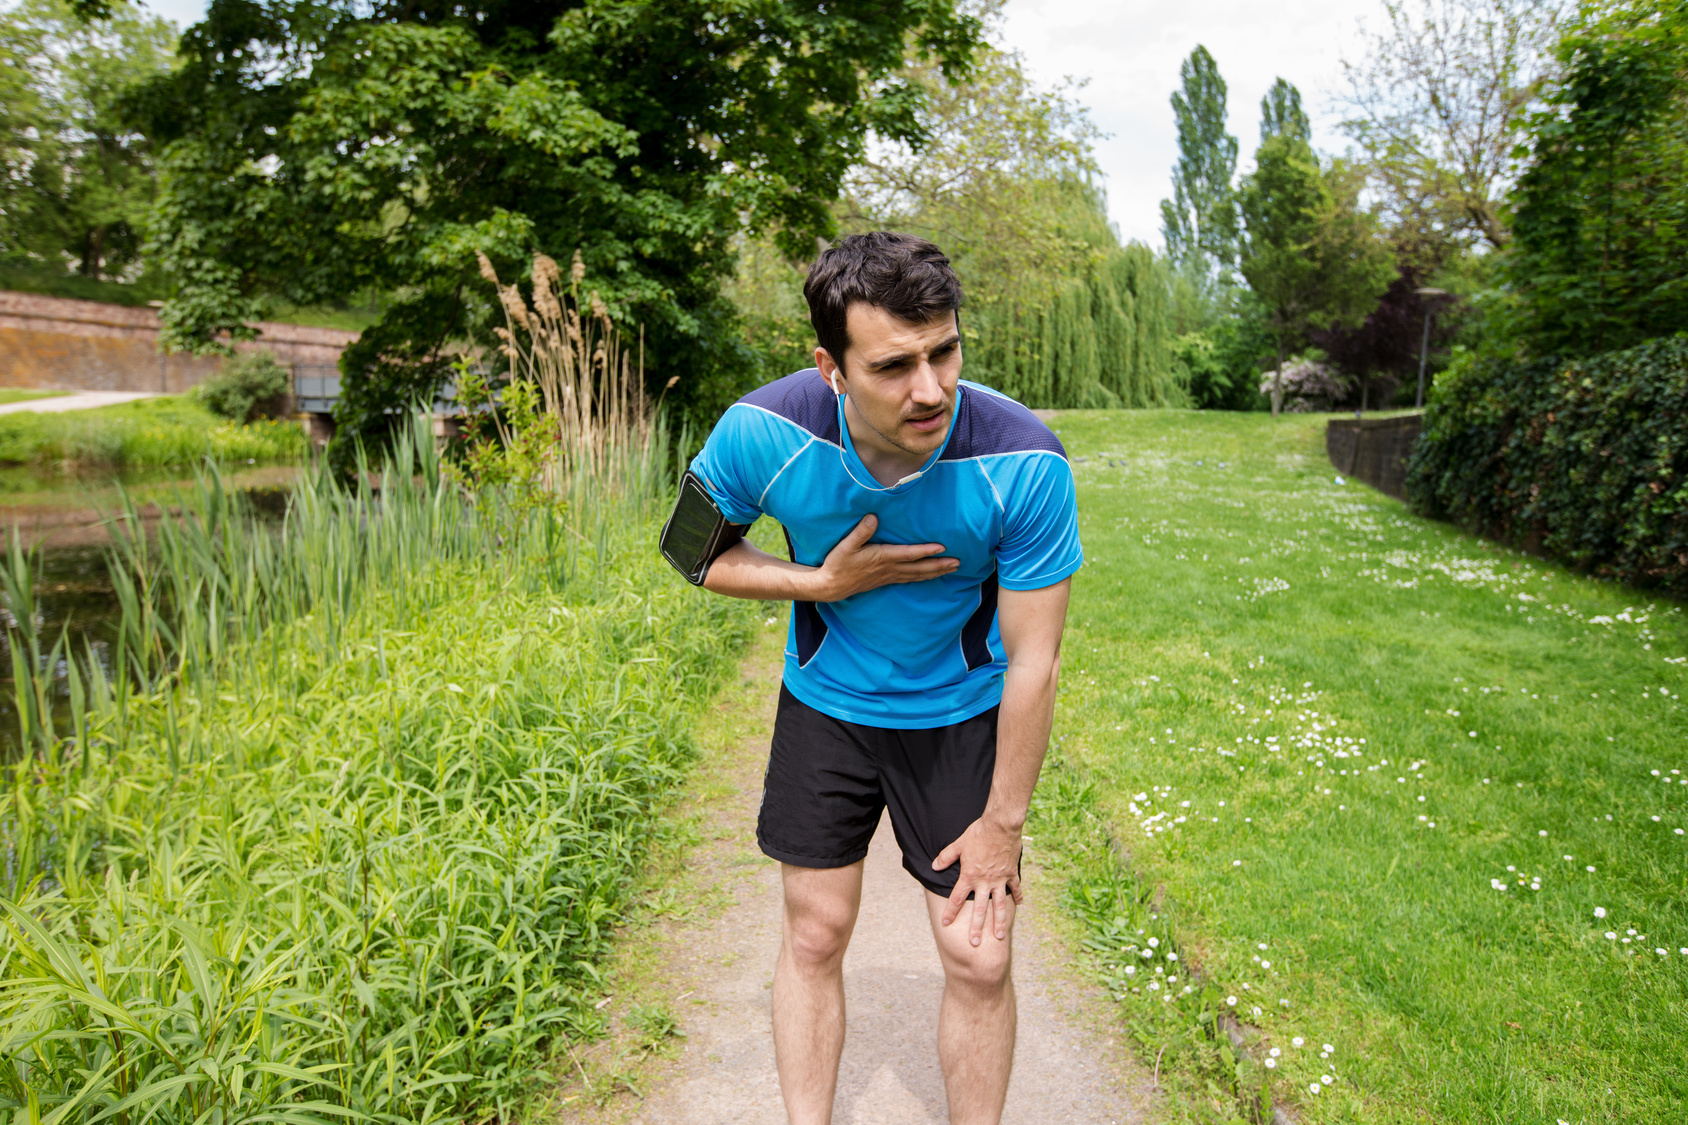 Lower Abdominal Pain while running